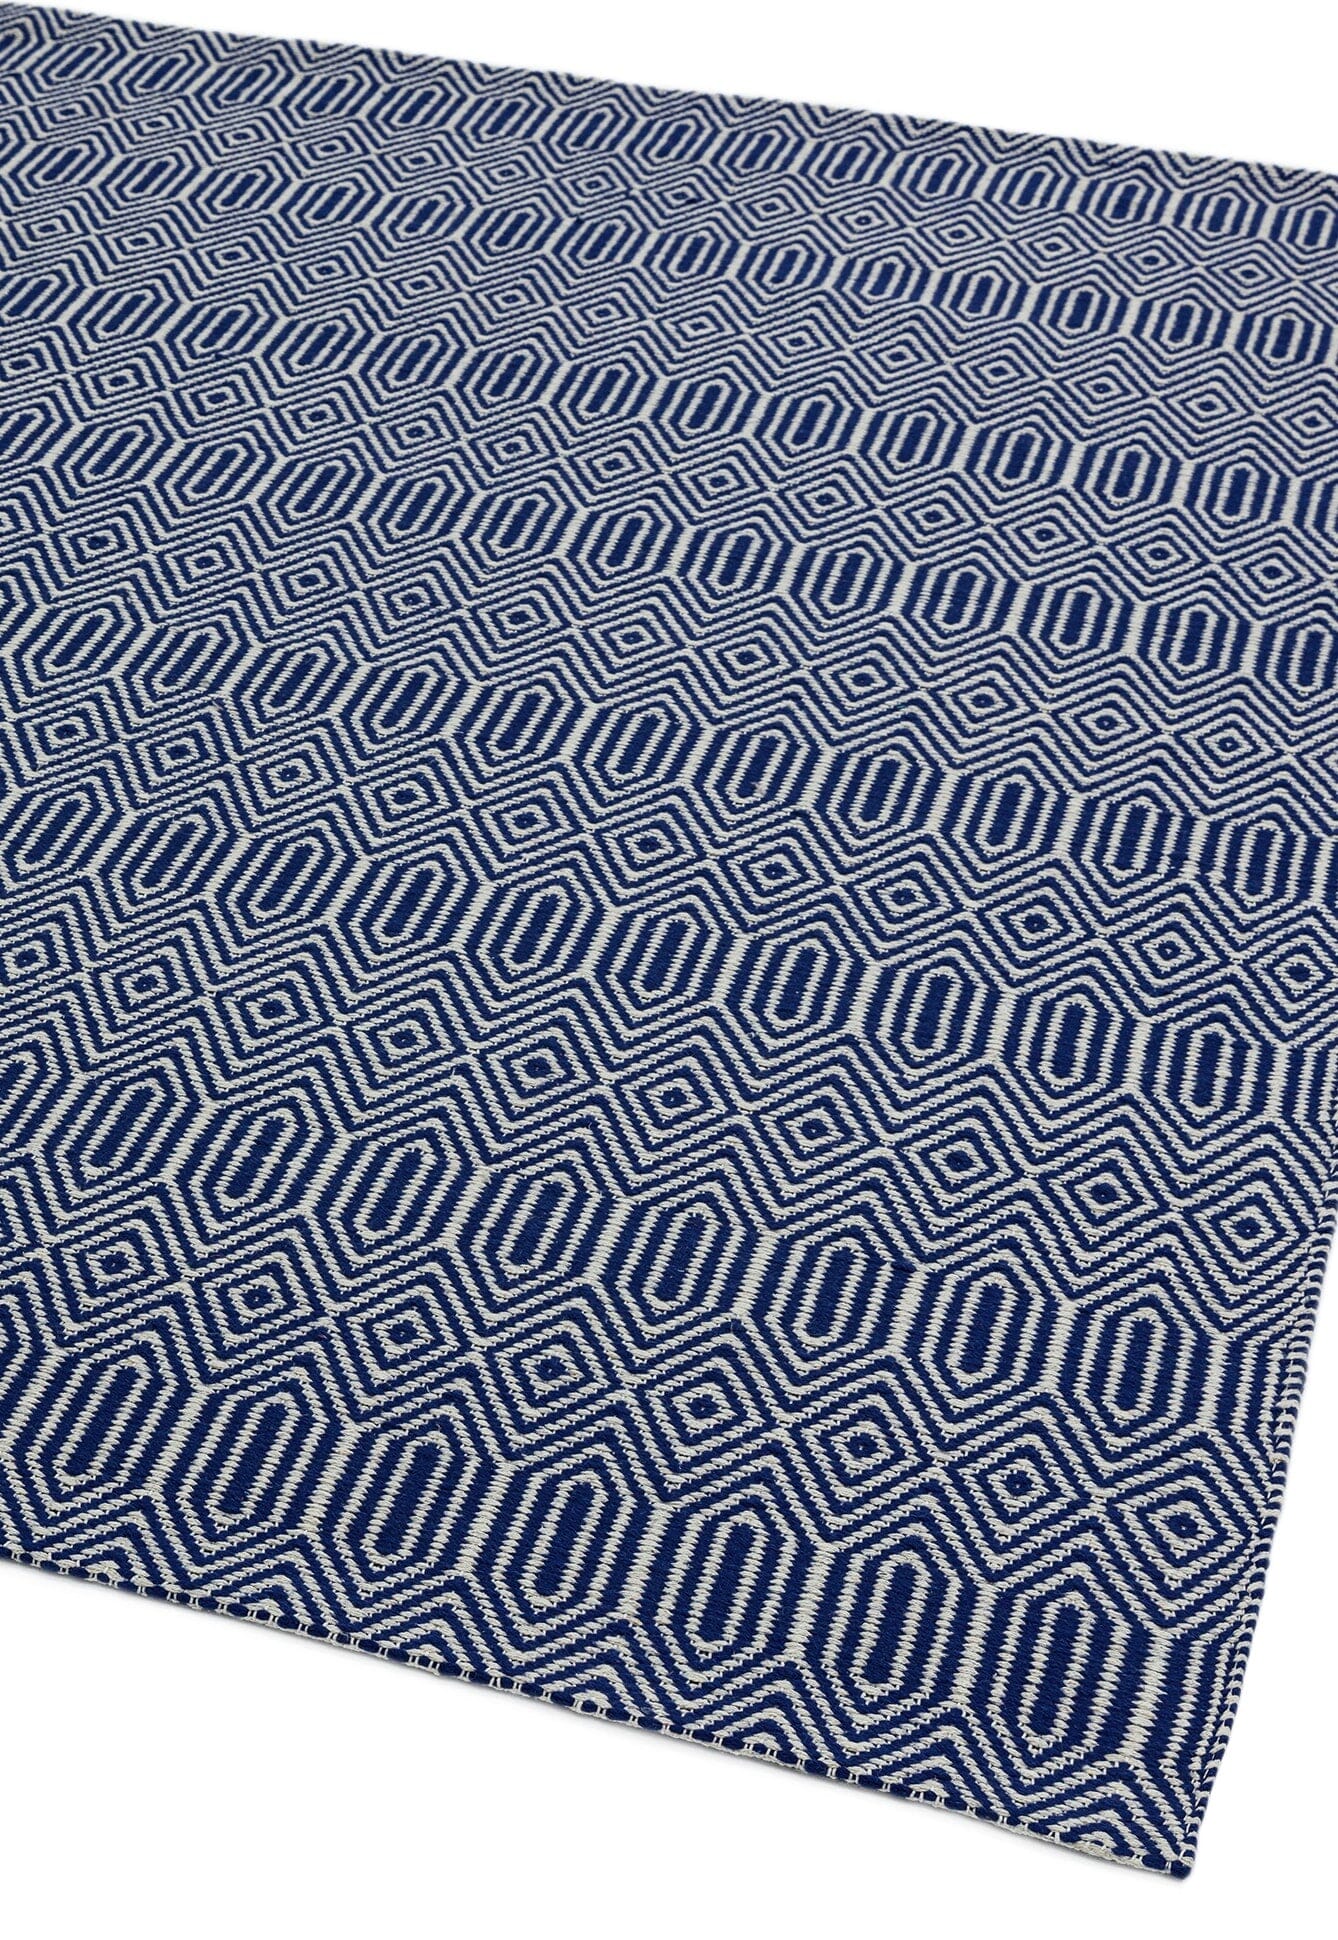 Asiatic Carpets Sloan Hand Woven Runner Blue - 66 x 200cm